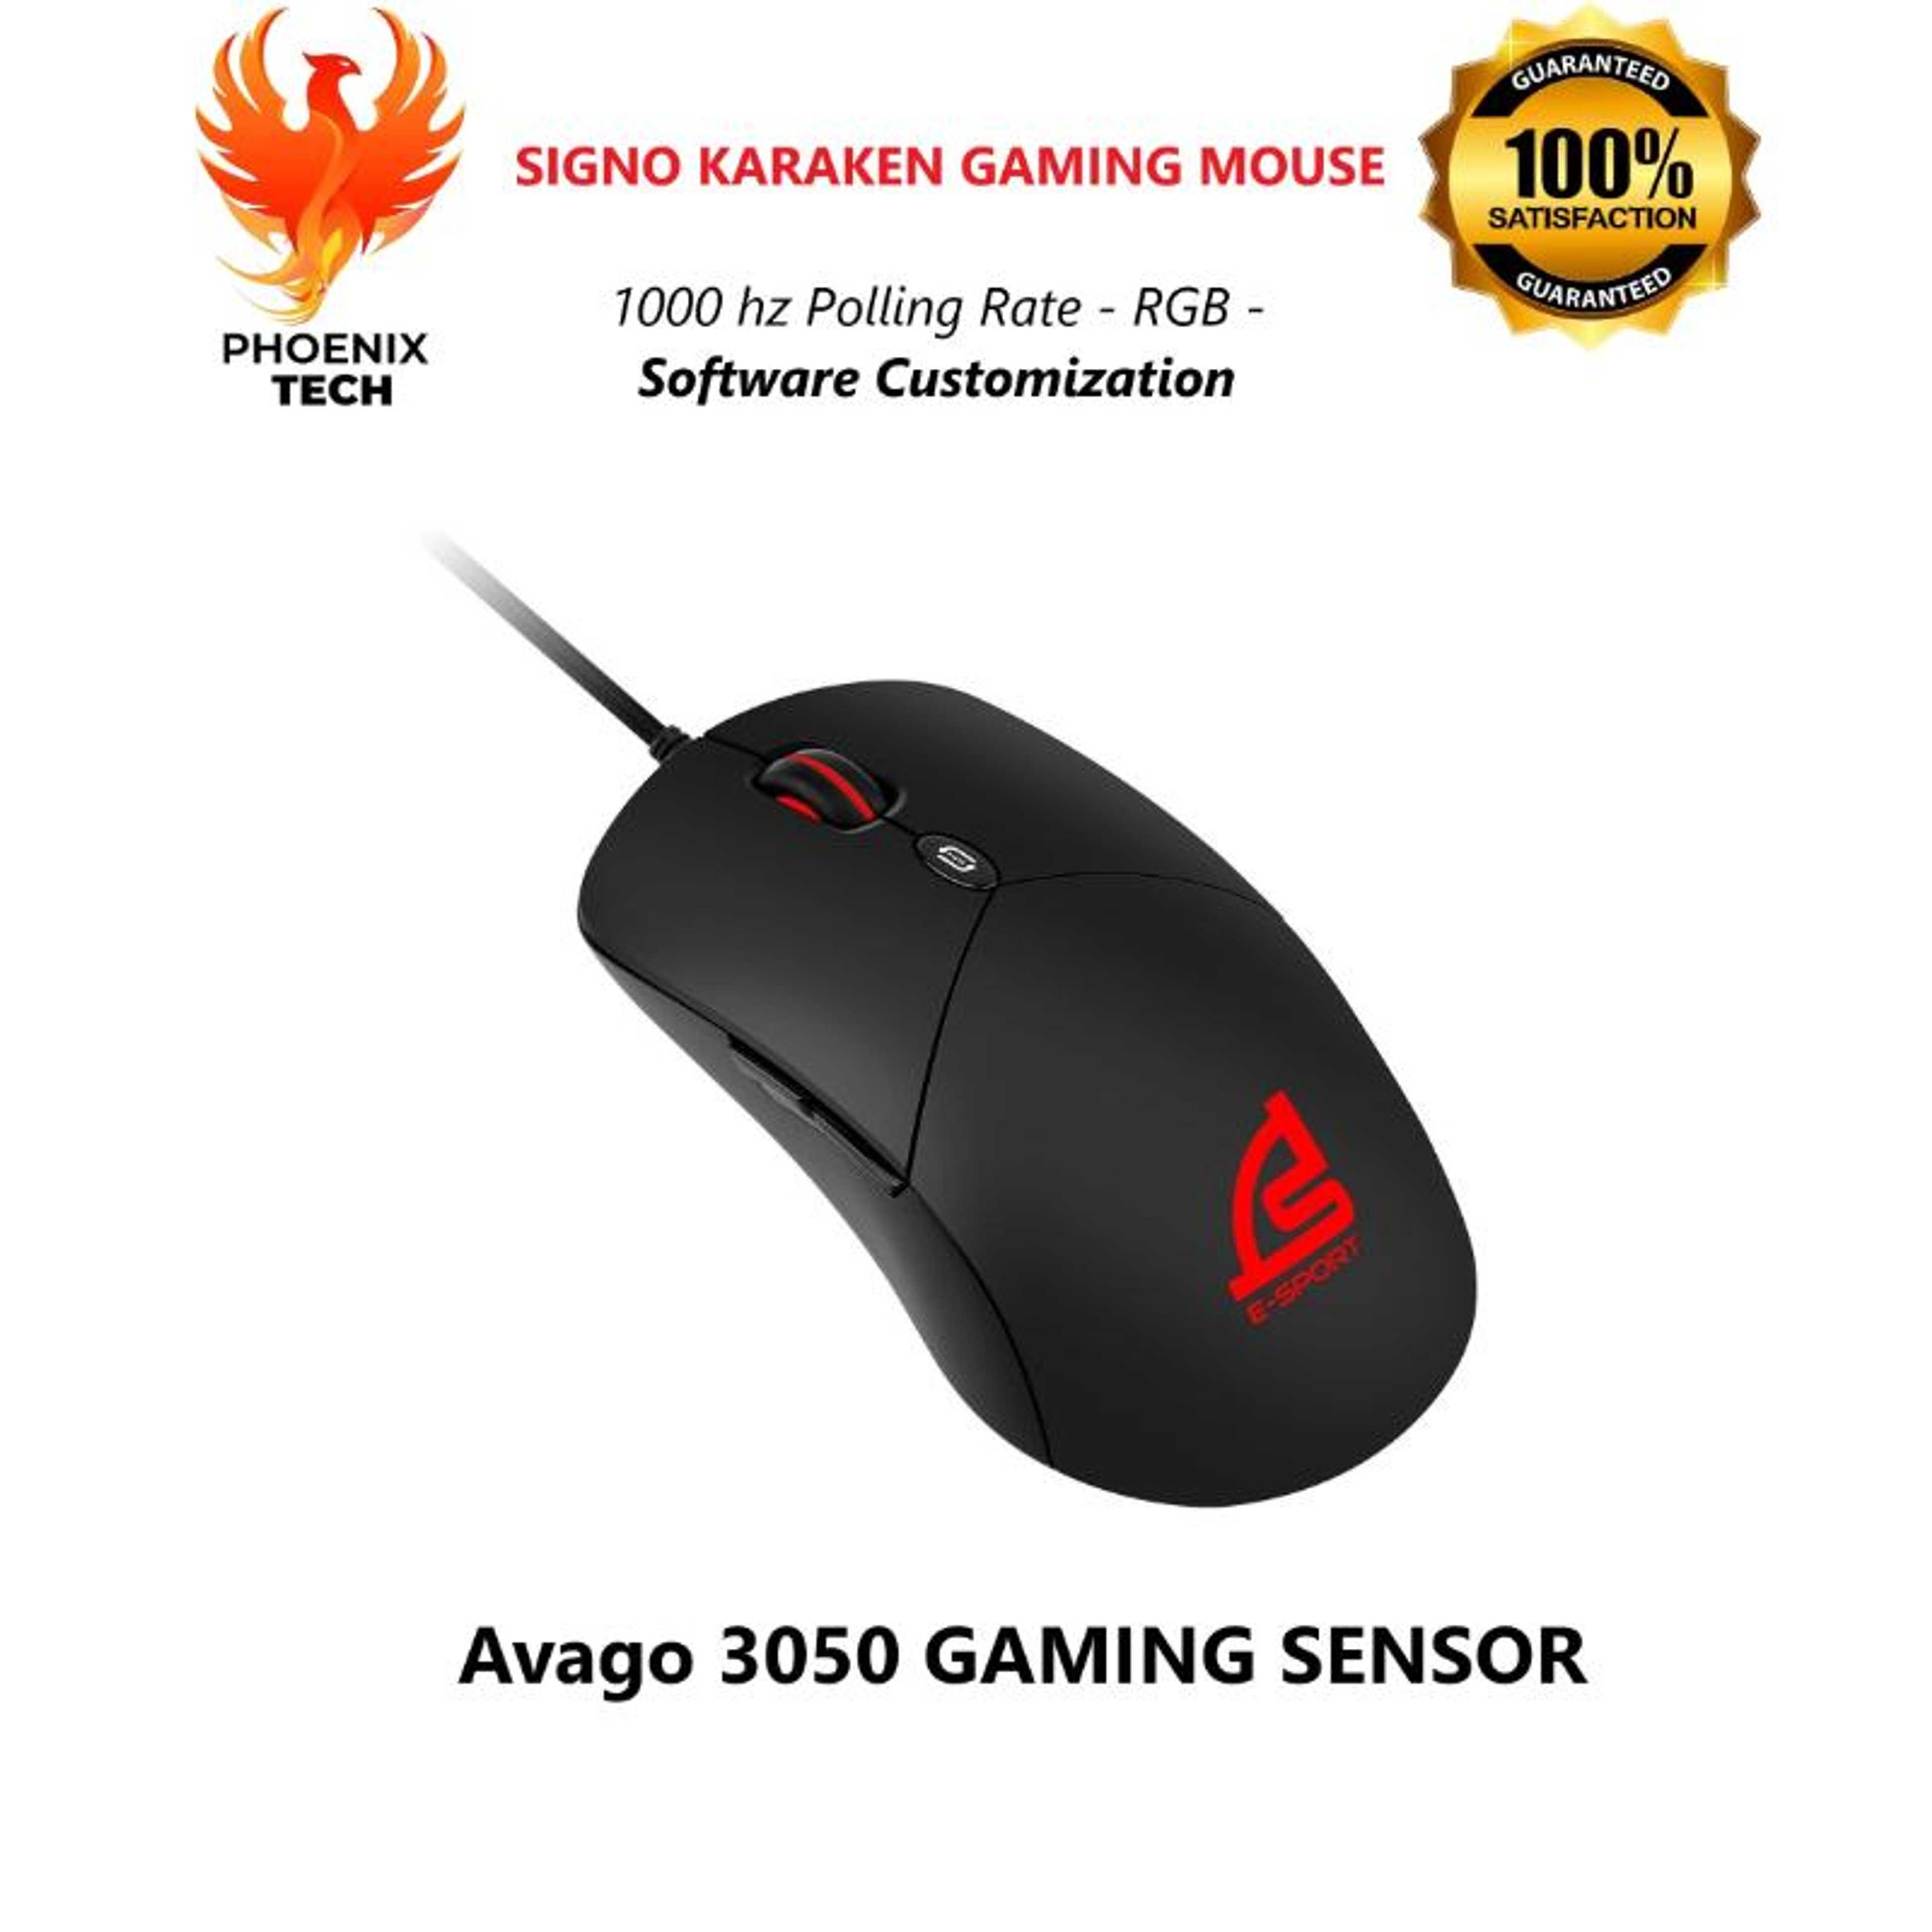 SIGNO Kraken USB Gaming Mouse Wired Ergonomic Design 16.8 Million RGB Lighting Real 1000-4000 DPI 6 Programmable Bottons PC And MAC For Windows 7/8/10/VISTA (GM-915)